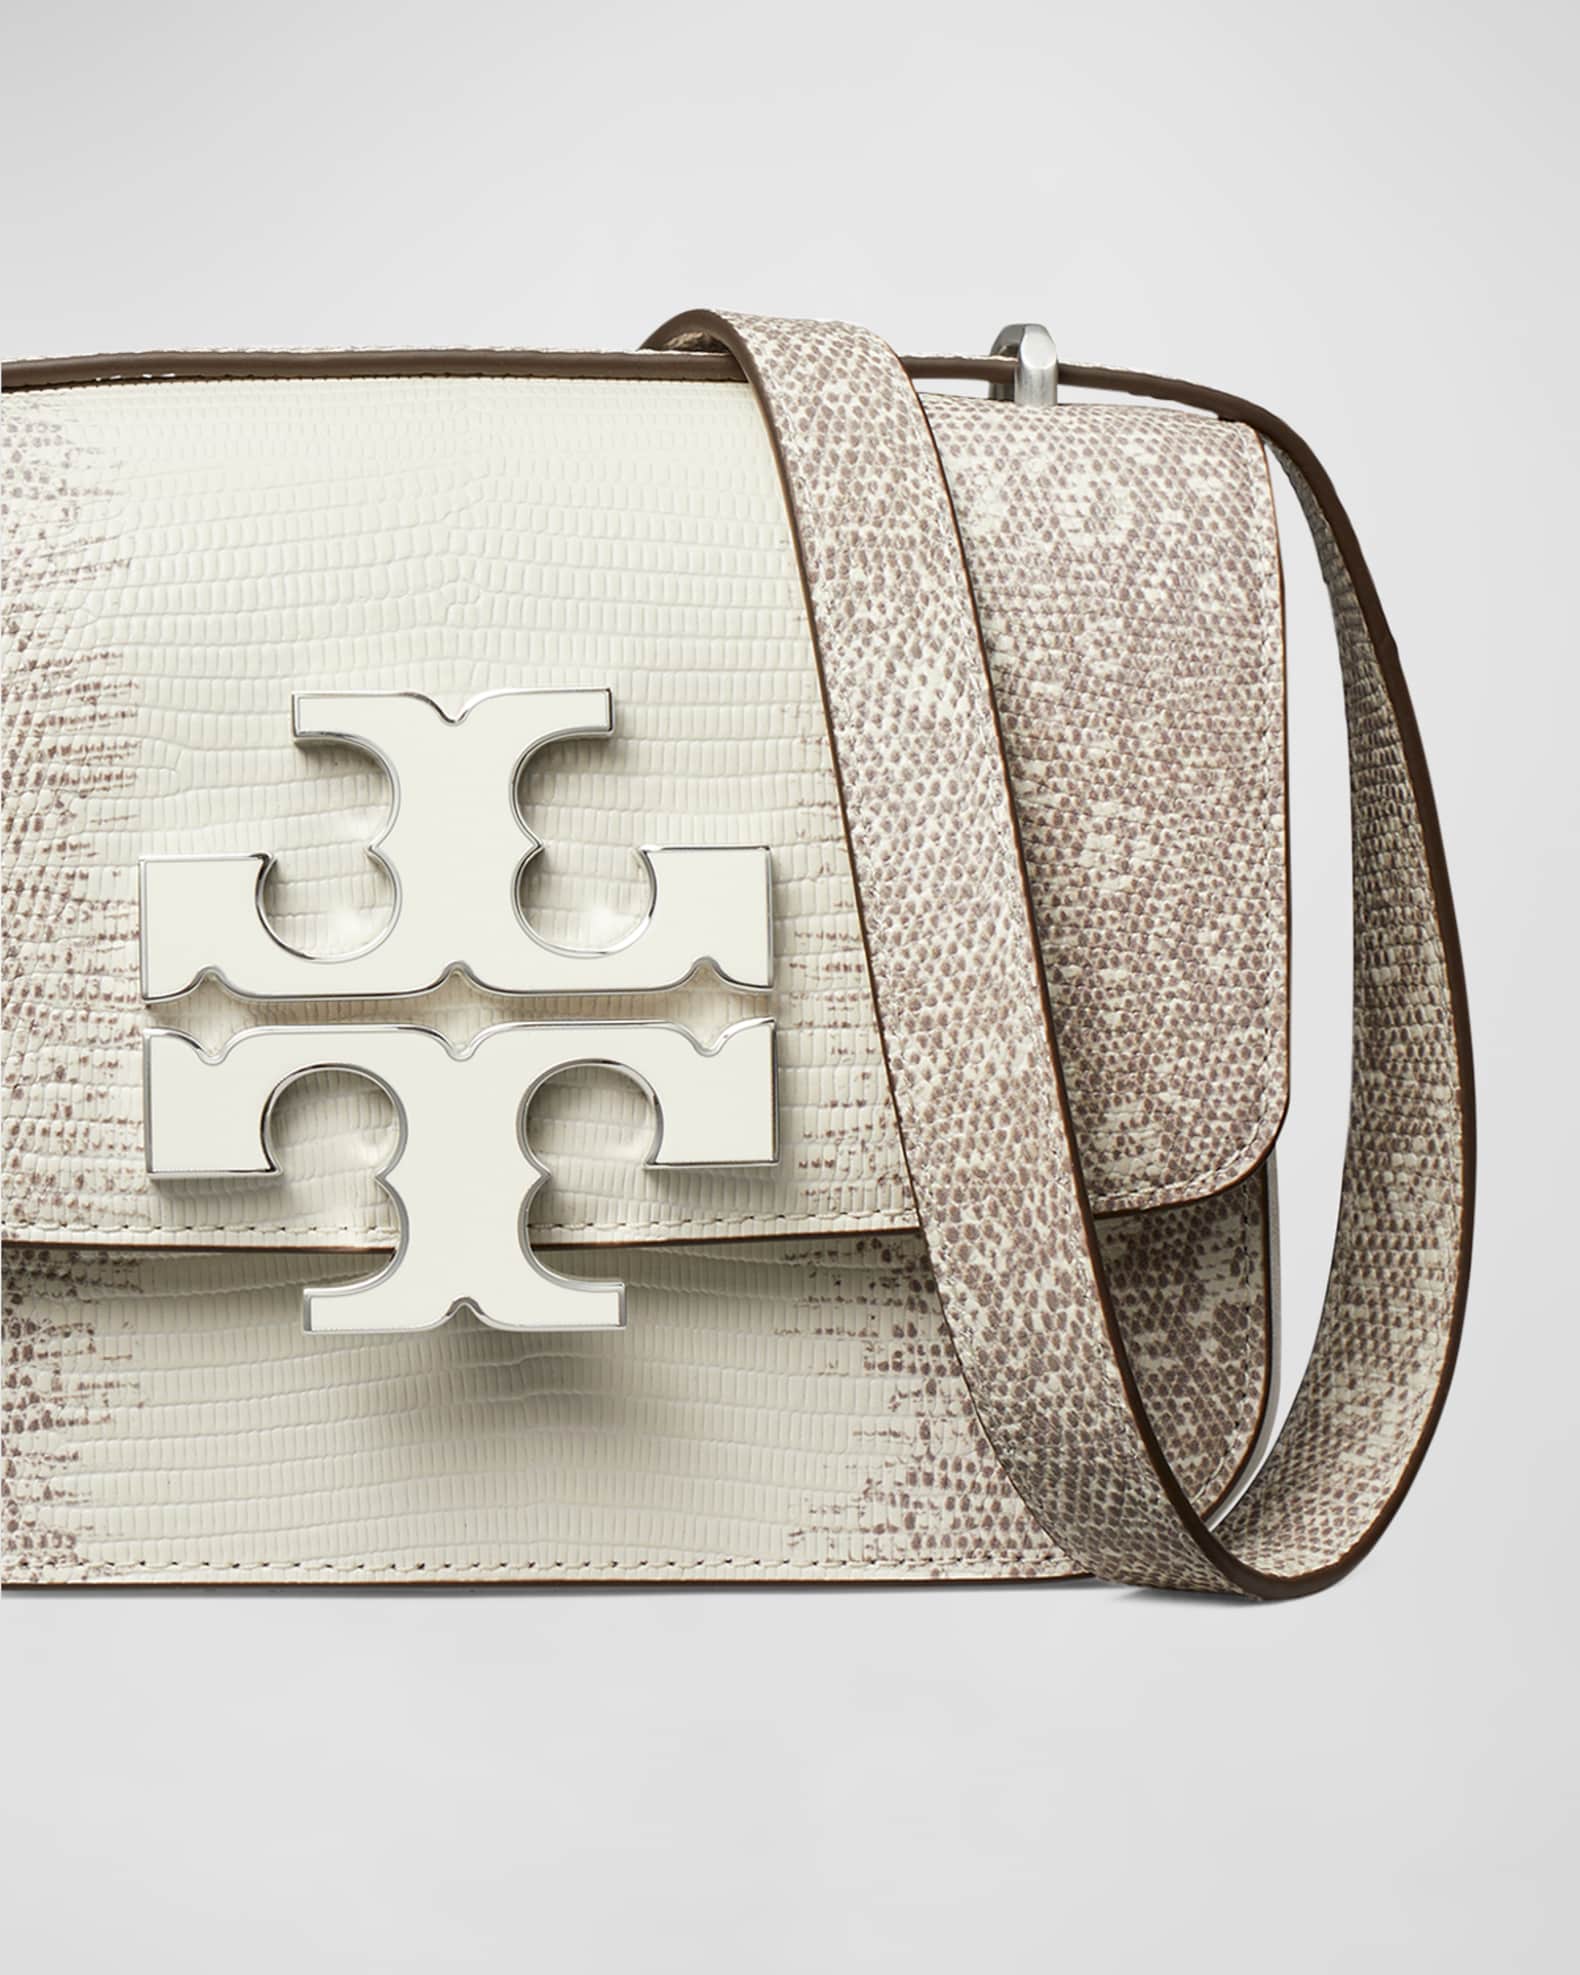 Eleanor Croc-Embossed Bag: Women's Designer Shoulder Bags